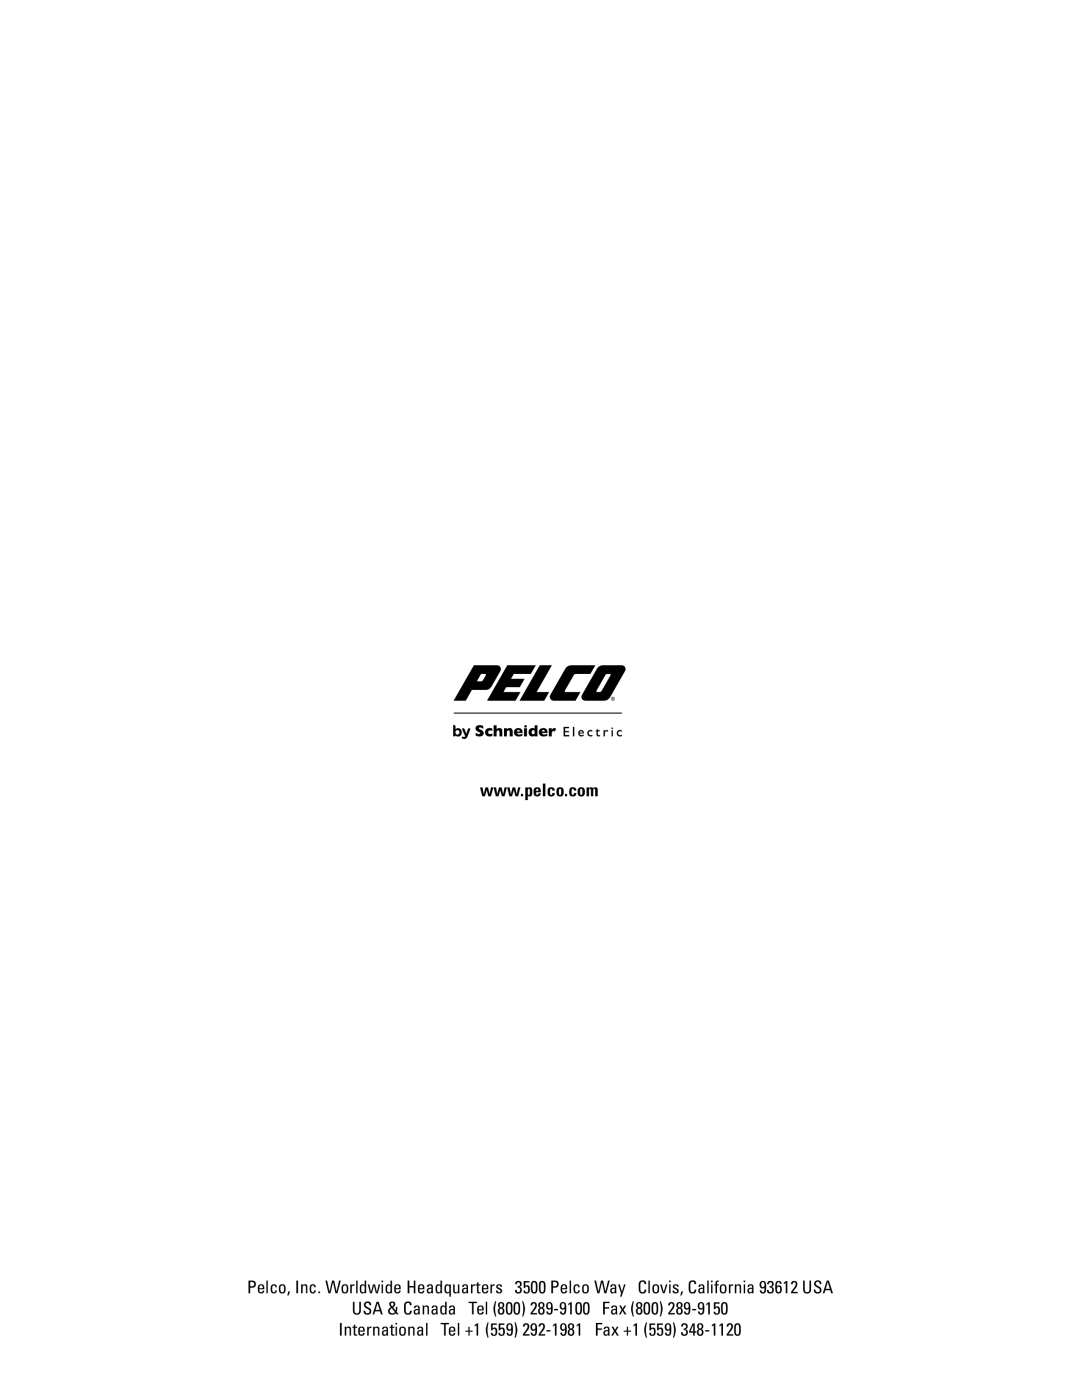 Pelco EH8106L Legacy manual USA & Canada Tel 800 289-9100Fax, International Tel +1 559 292-1981Fax +1 